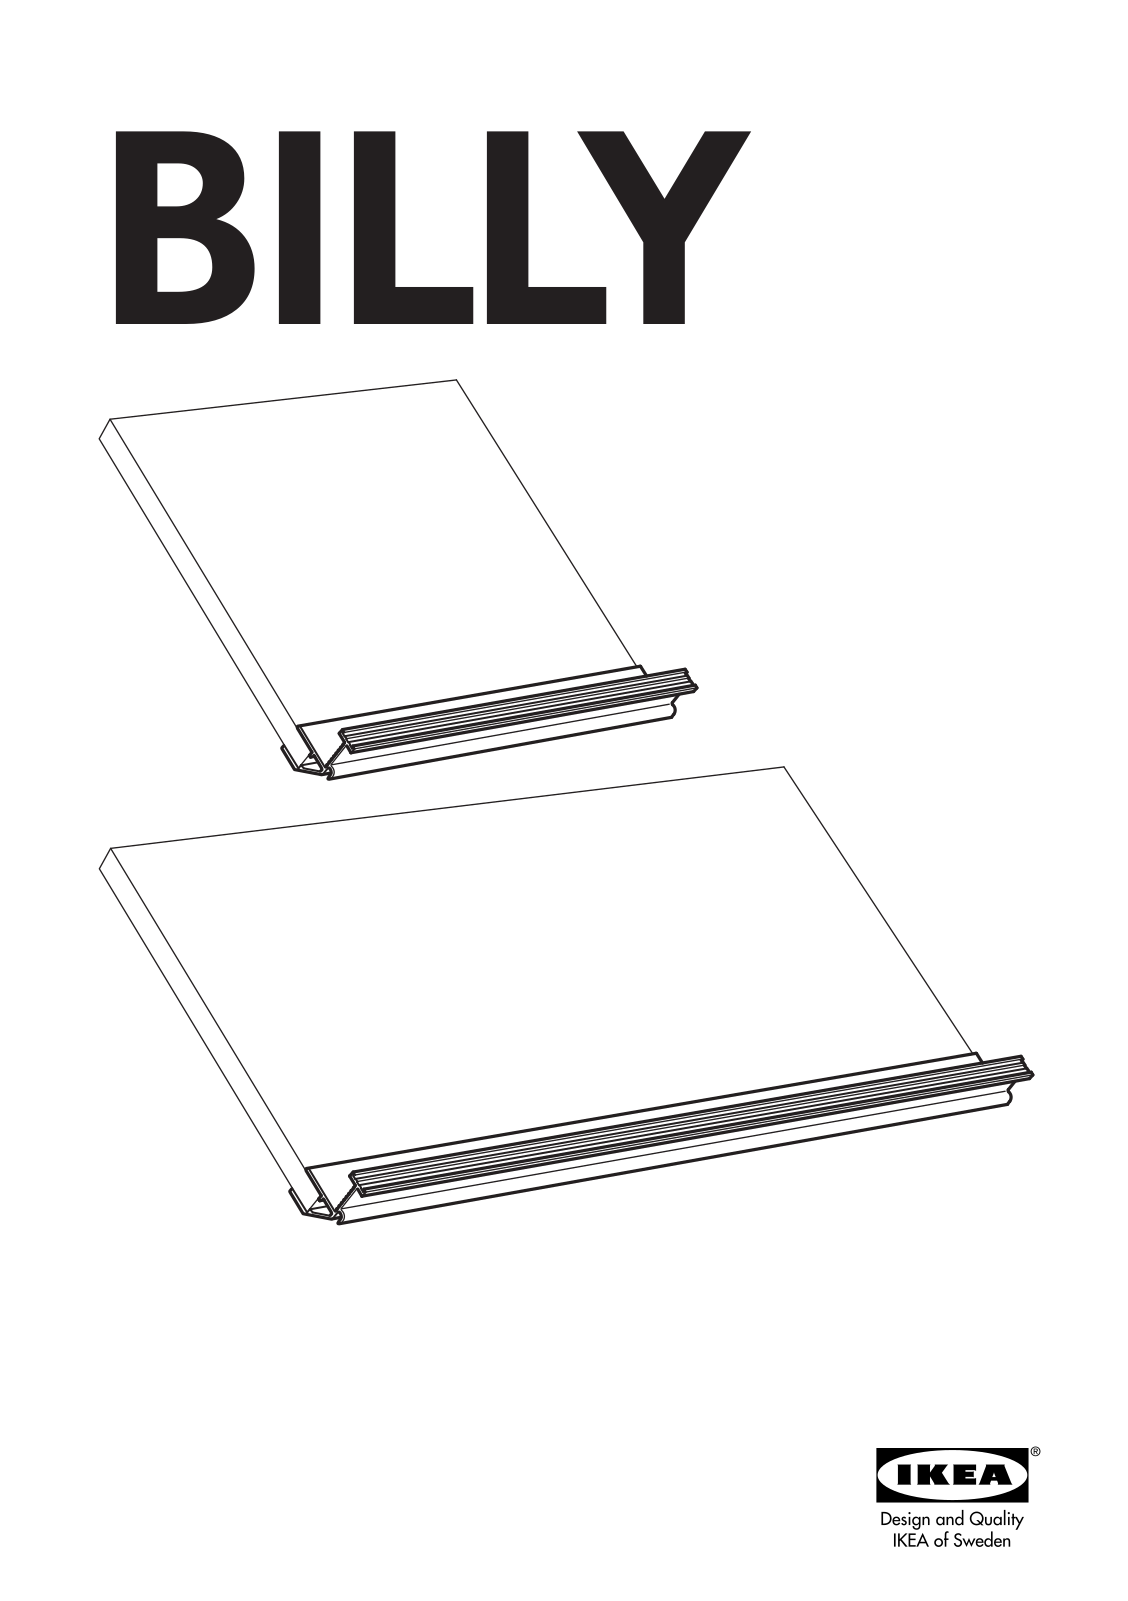 IKEA BILLY BOOK-MAGAZINE RAIL Assembly Instruction